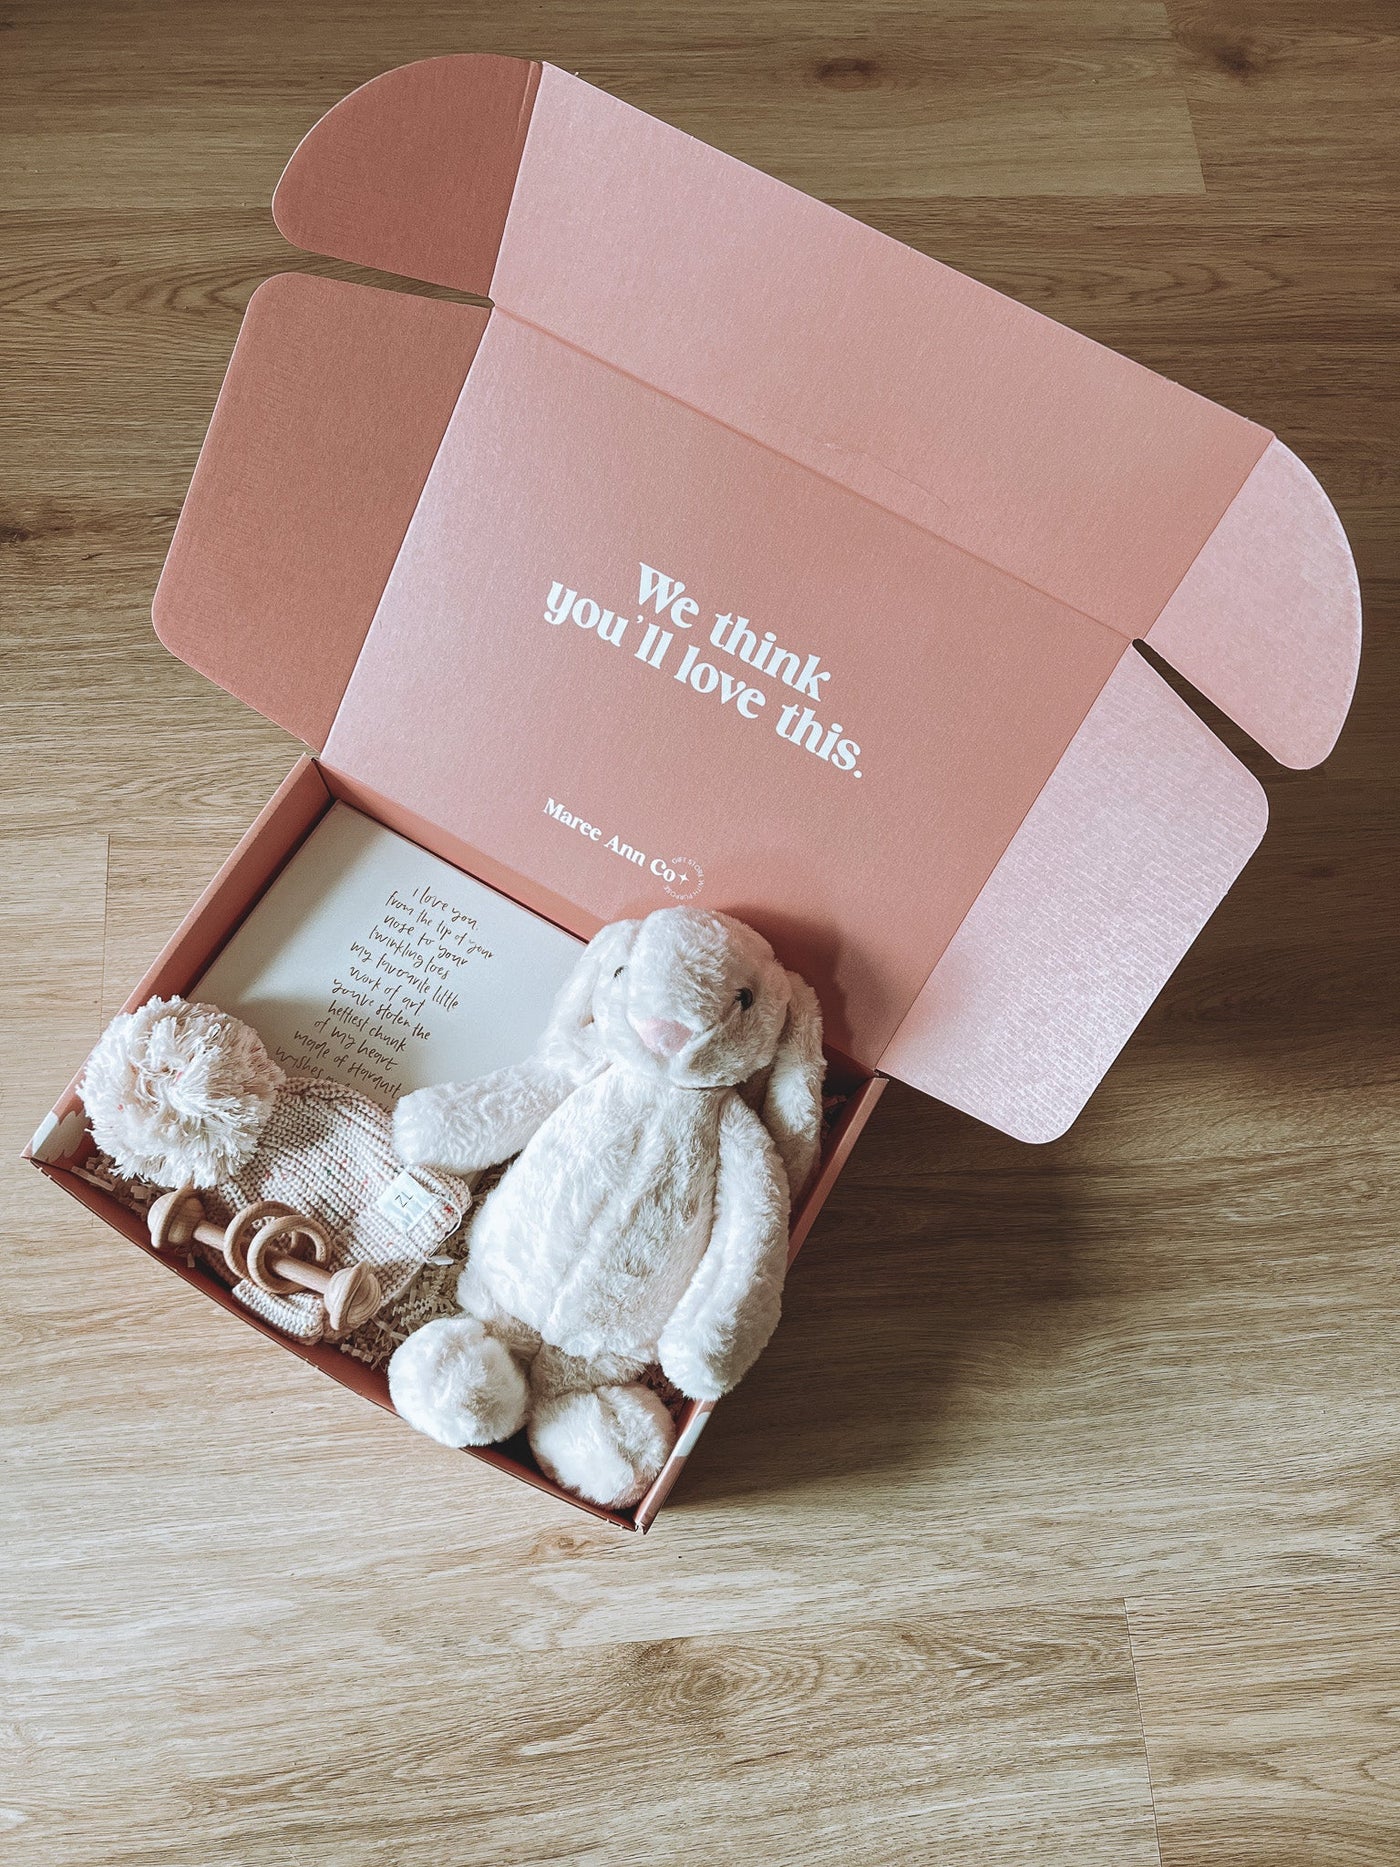 Little bunny | Gift Box - Maree Ann Co